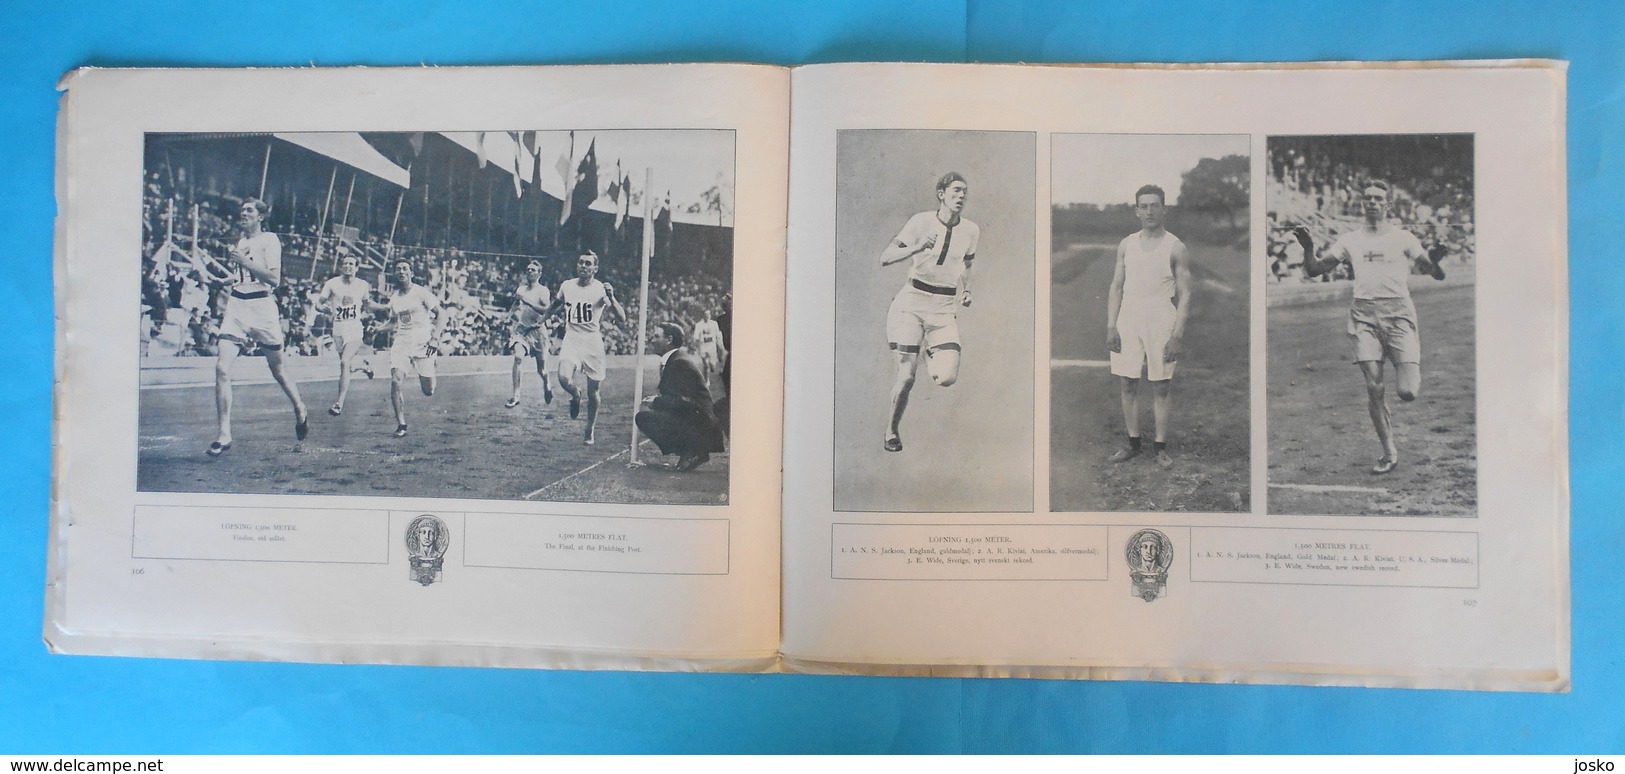 ATHLETICS on OLYMPIC GAMES 1912 STOCKHOLM - original vintage programme * athletisme atletismo atletica athletik athletic